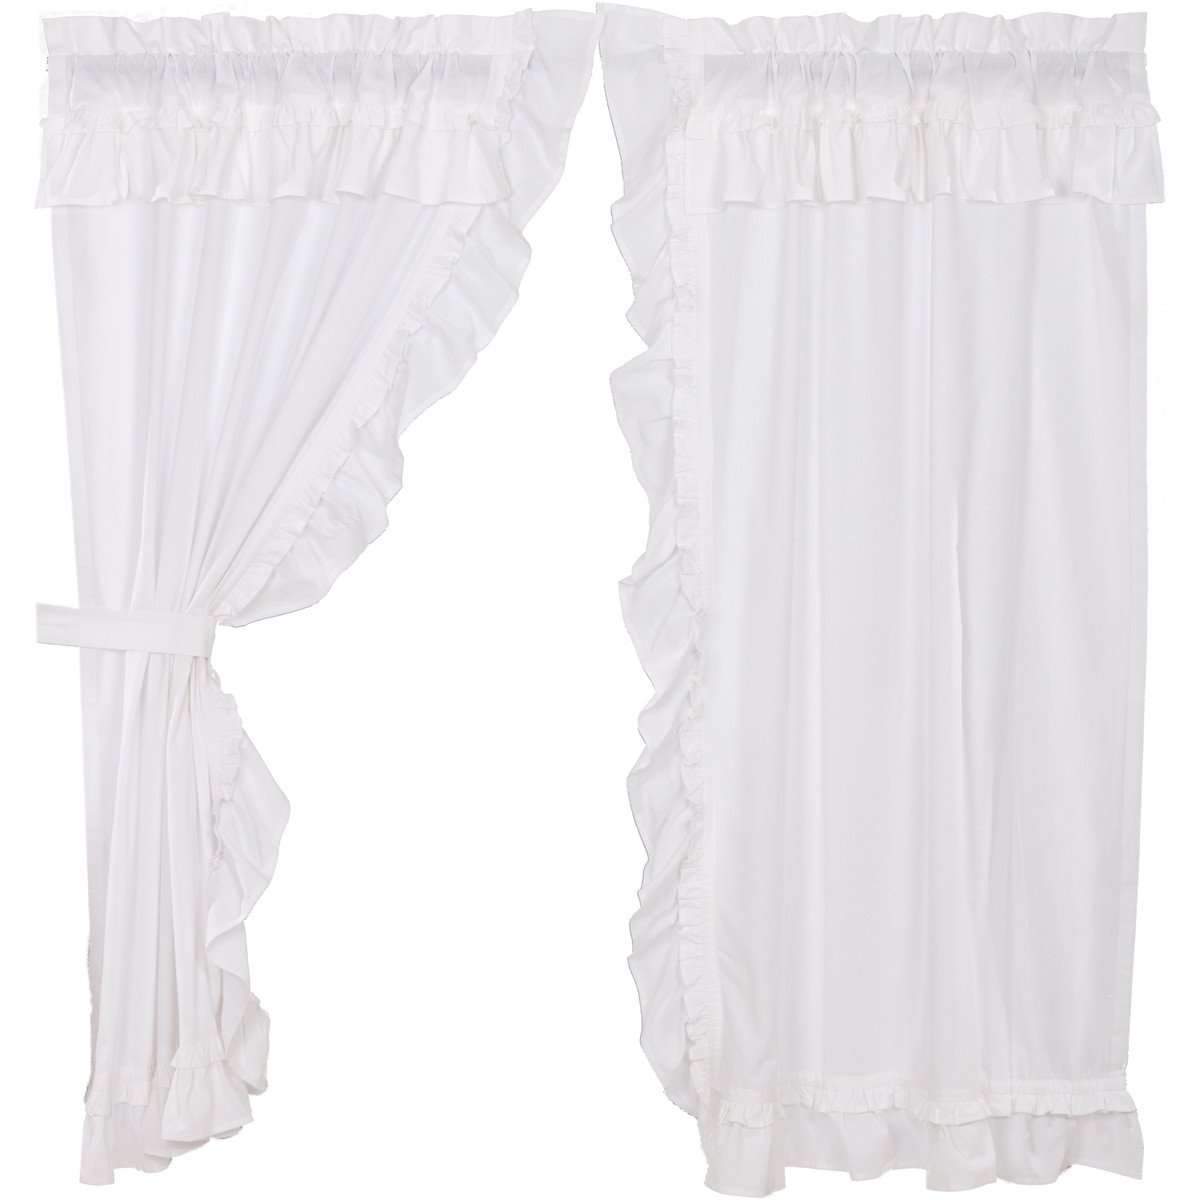 Muslin Ruffled Bleached White Short Panel Curtain Set of 2 63"x36" VHC Brands - The Fox Decor